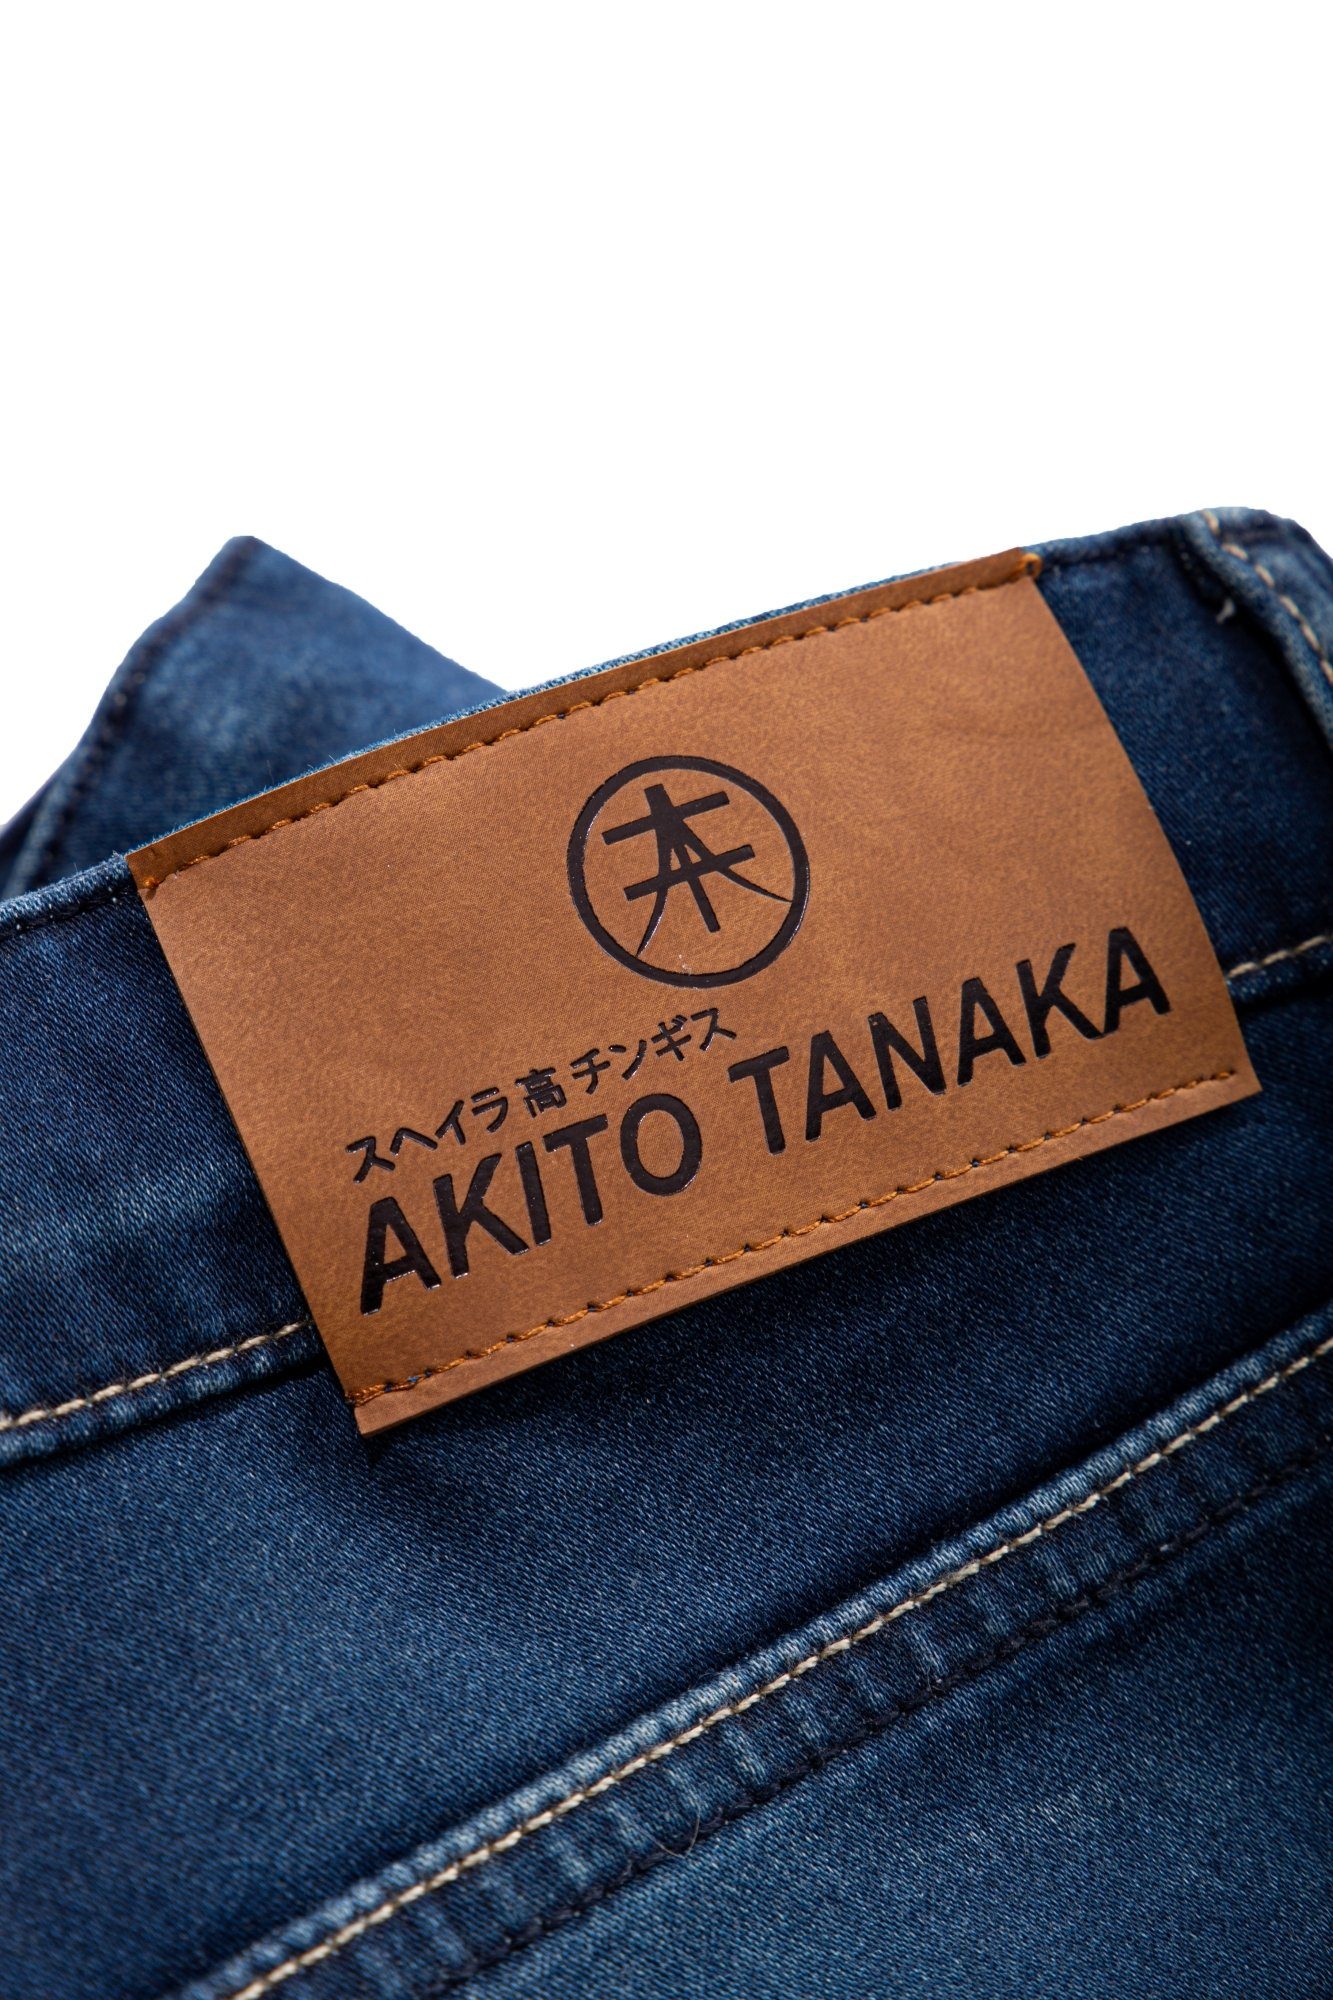 Jeansshorts Shorts elastische Akito Tanaka dunkelblau Jogg